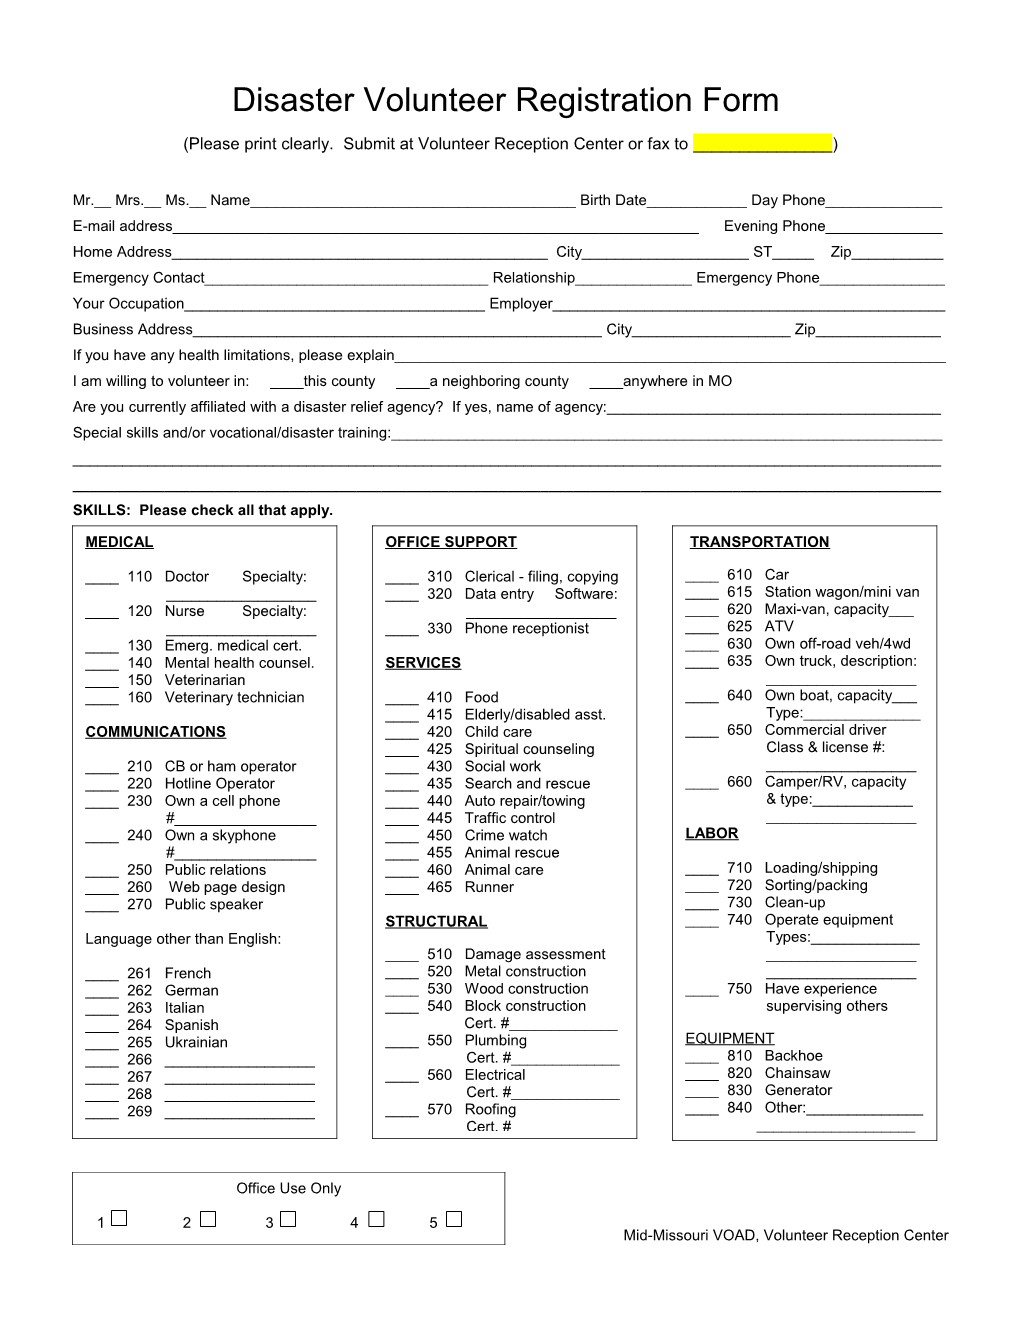 Disaster Volunteer Registration Form s1